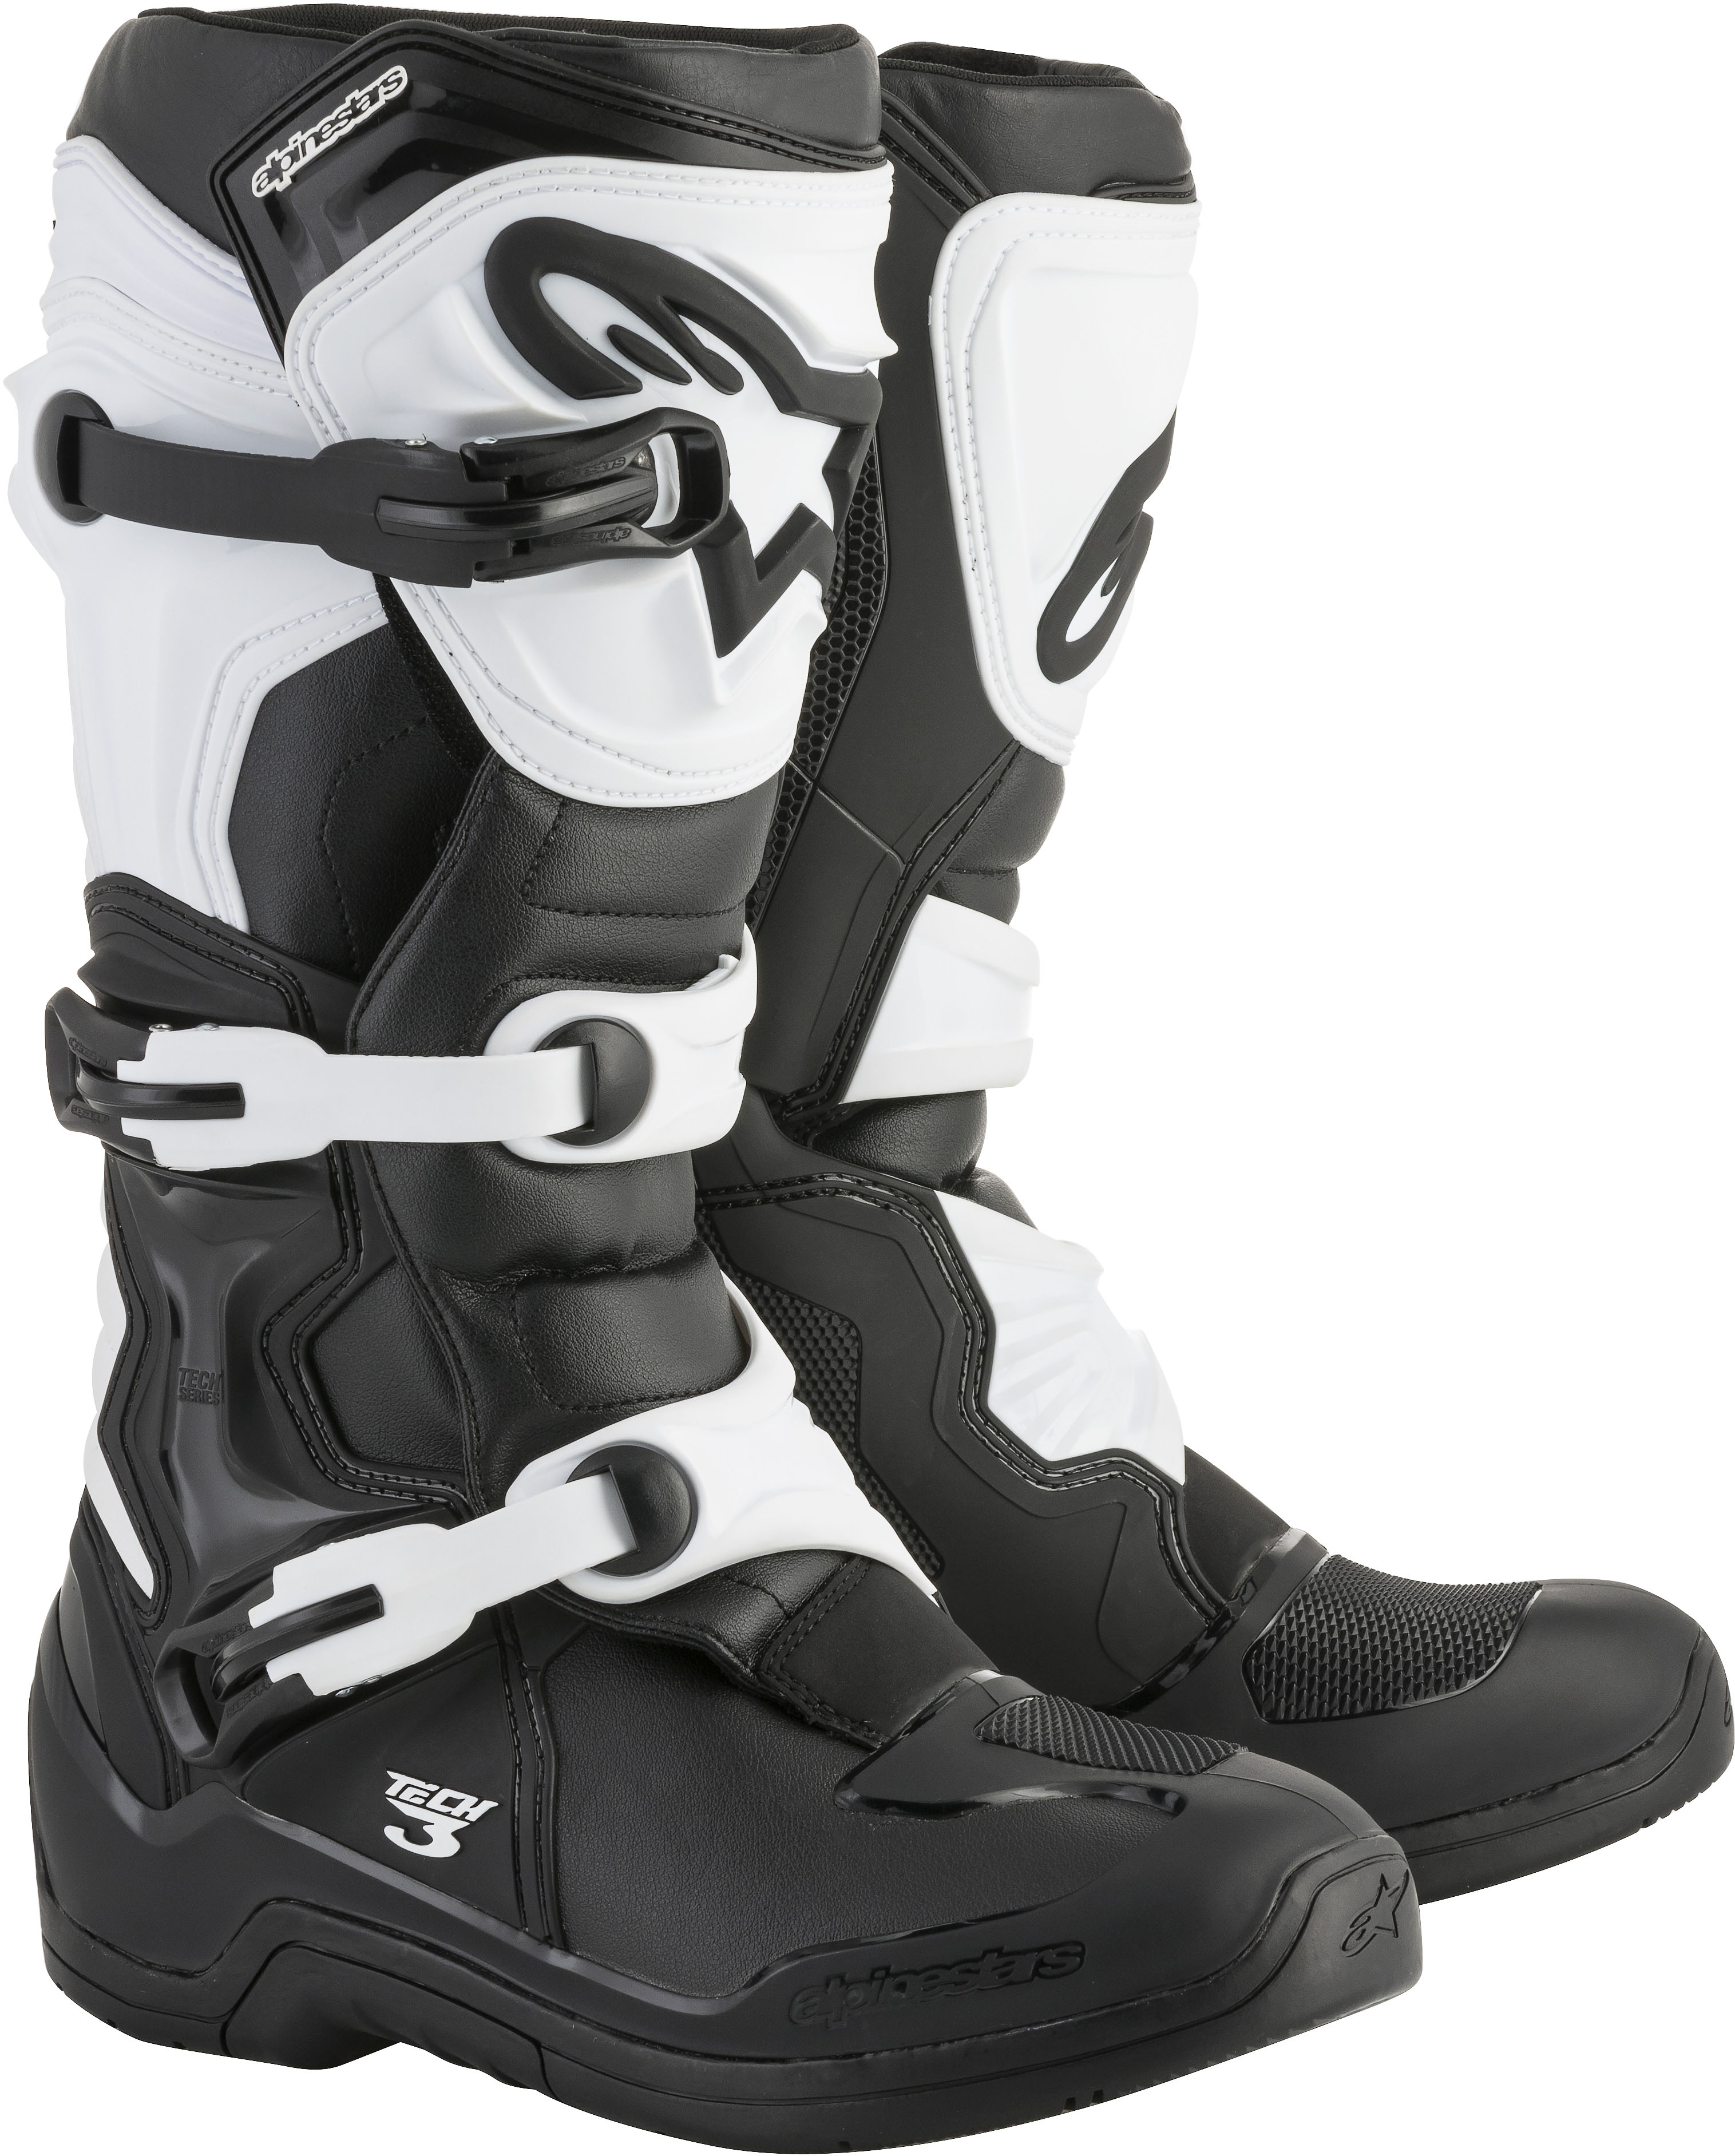 Tech 3 Boots Black/White Size 14 - Click Image to Close